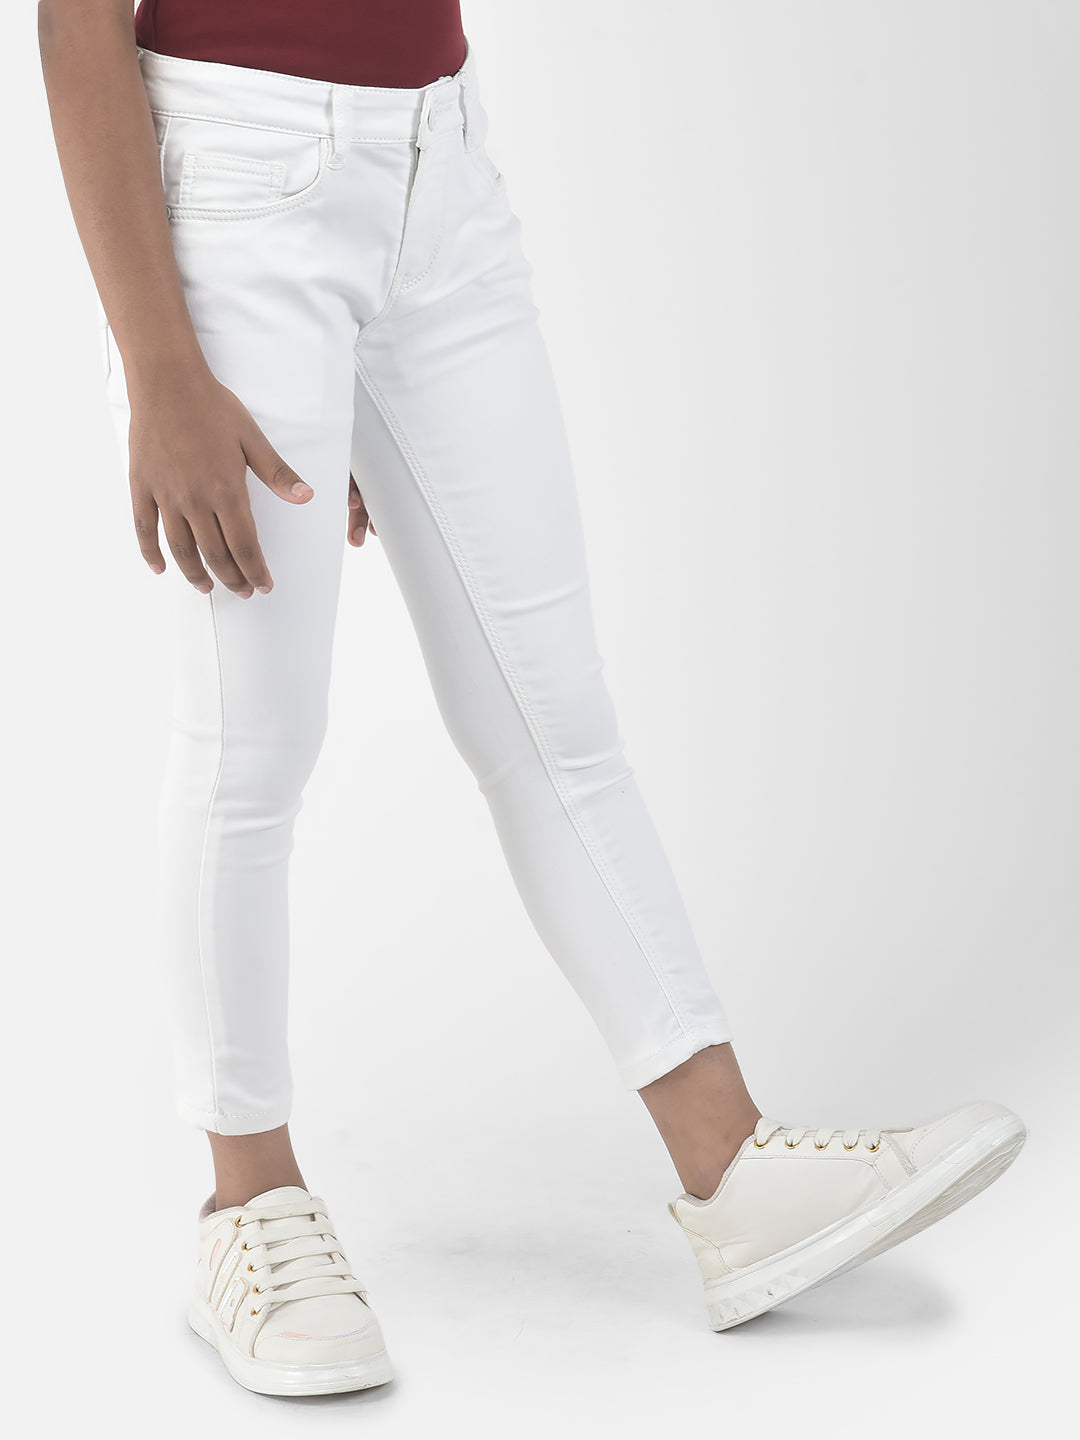  Slim-Fitting White Jeans